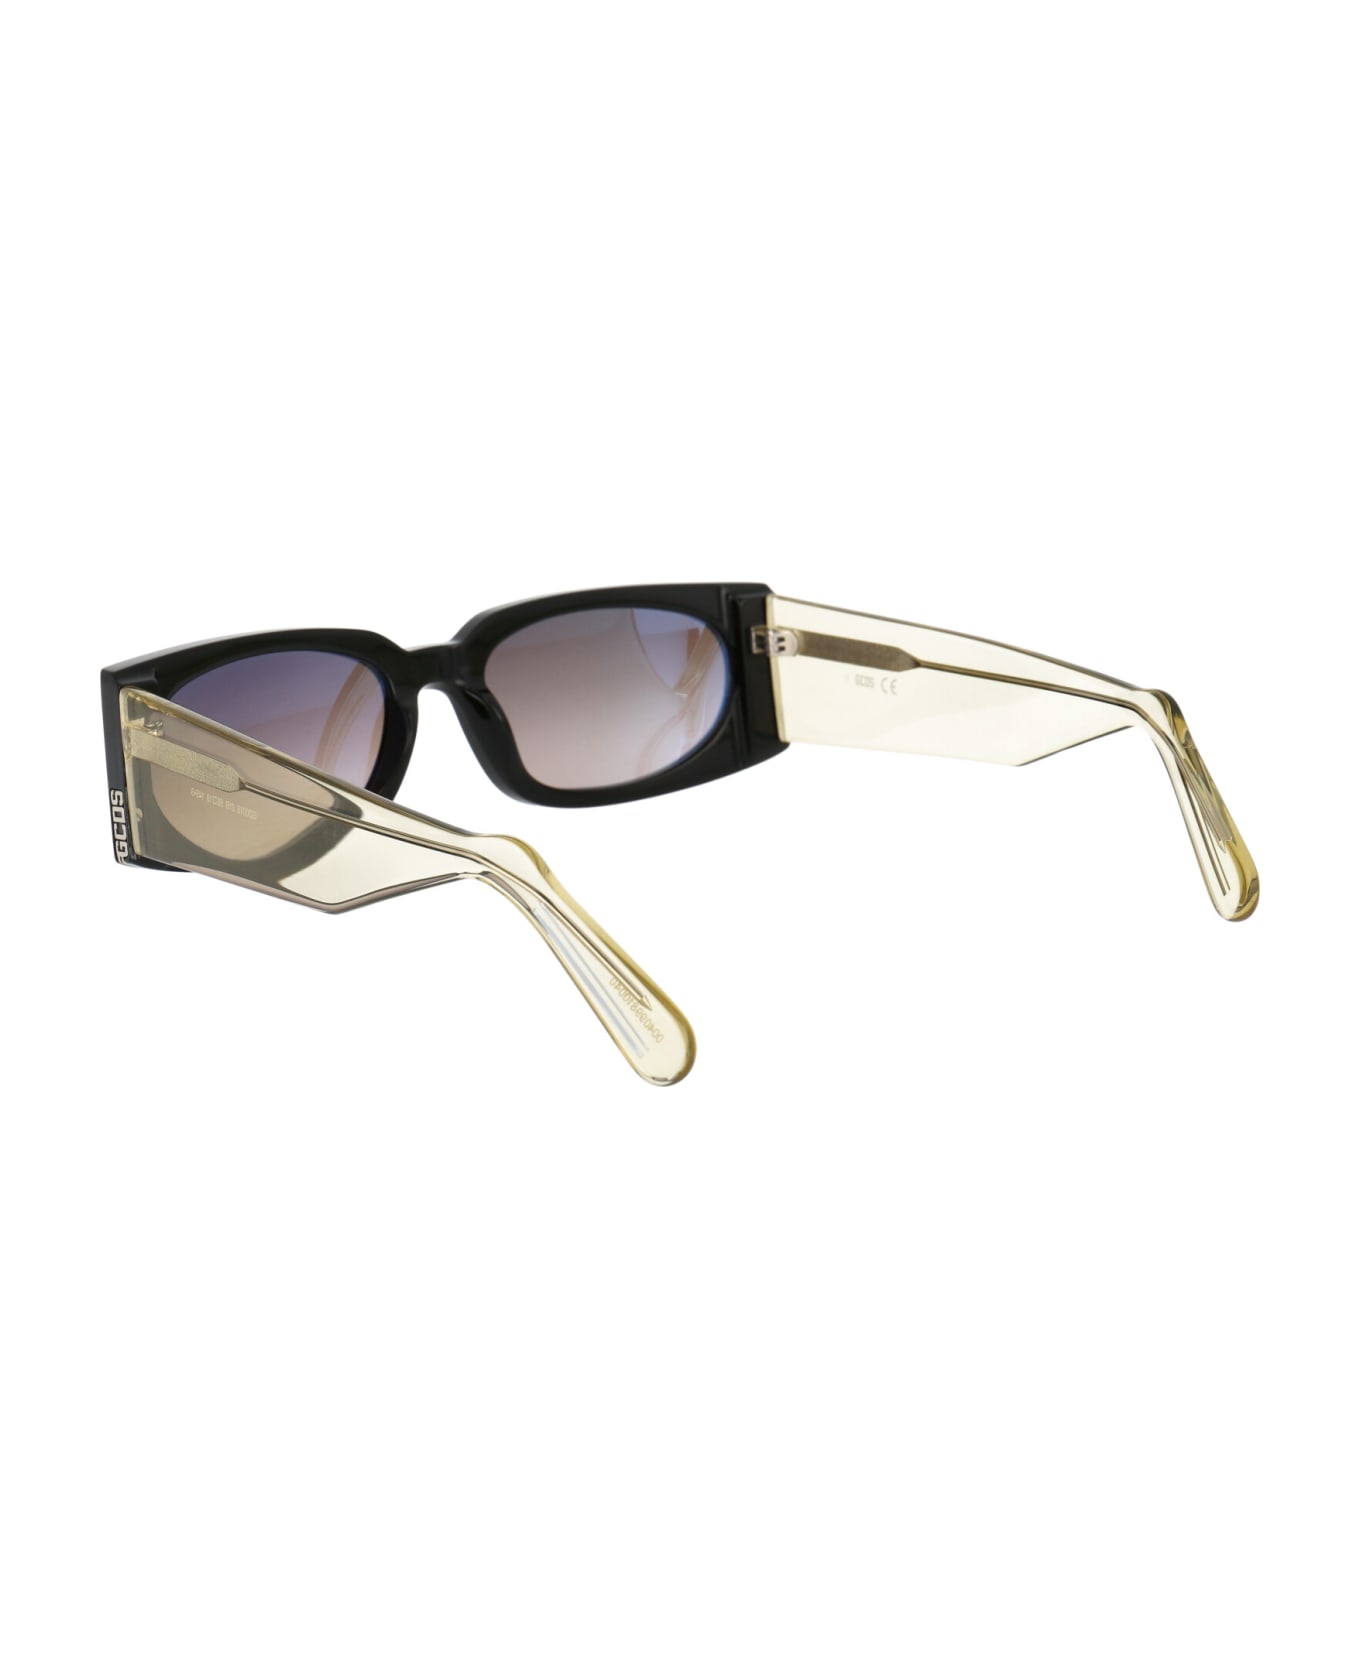 GCDS Gd0016 Sunglasses - 01B BLACK